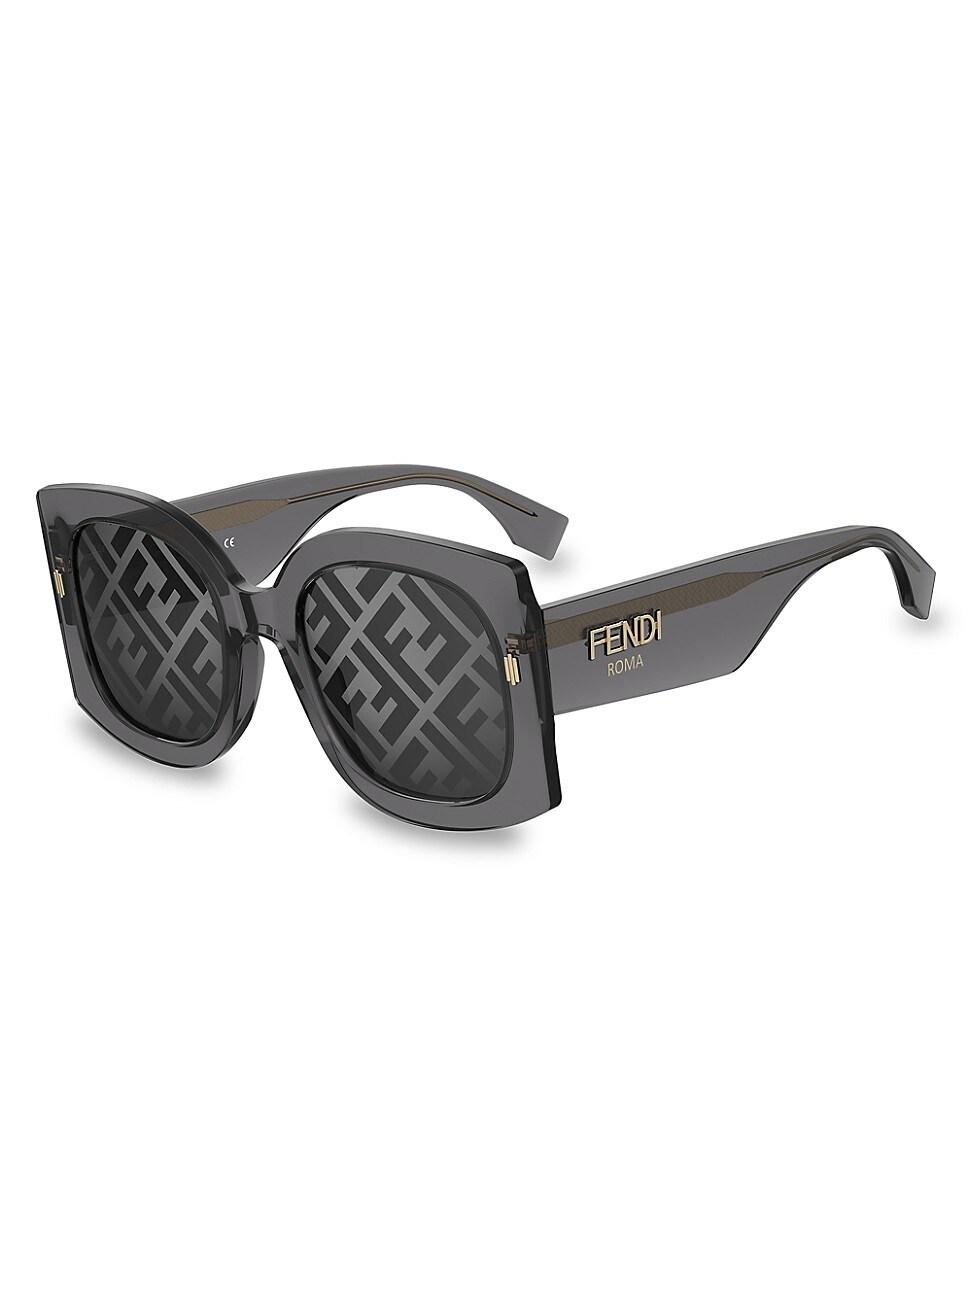 Fendi 53mm Oversized Square Logo Sunglasses in Gray | Lyst